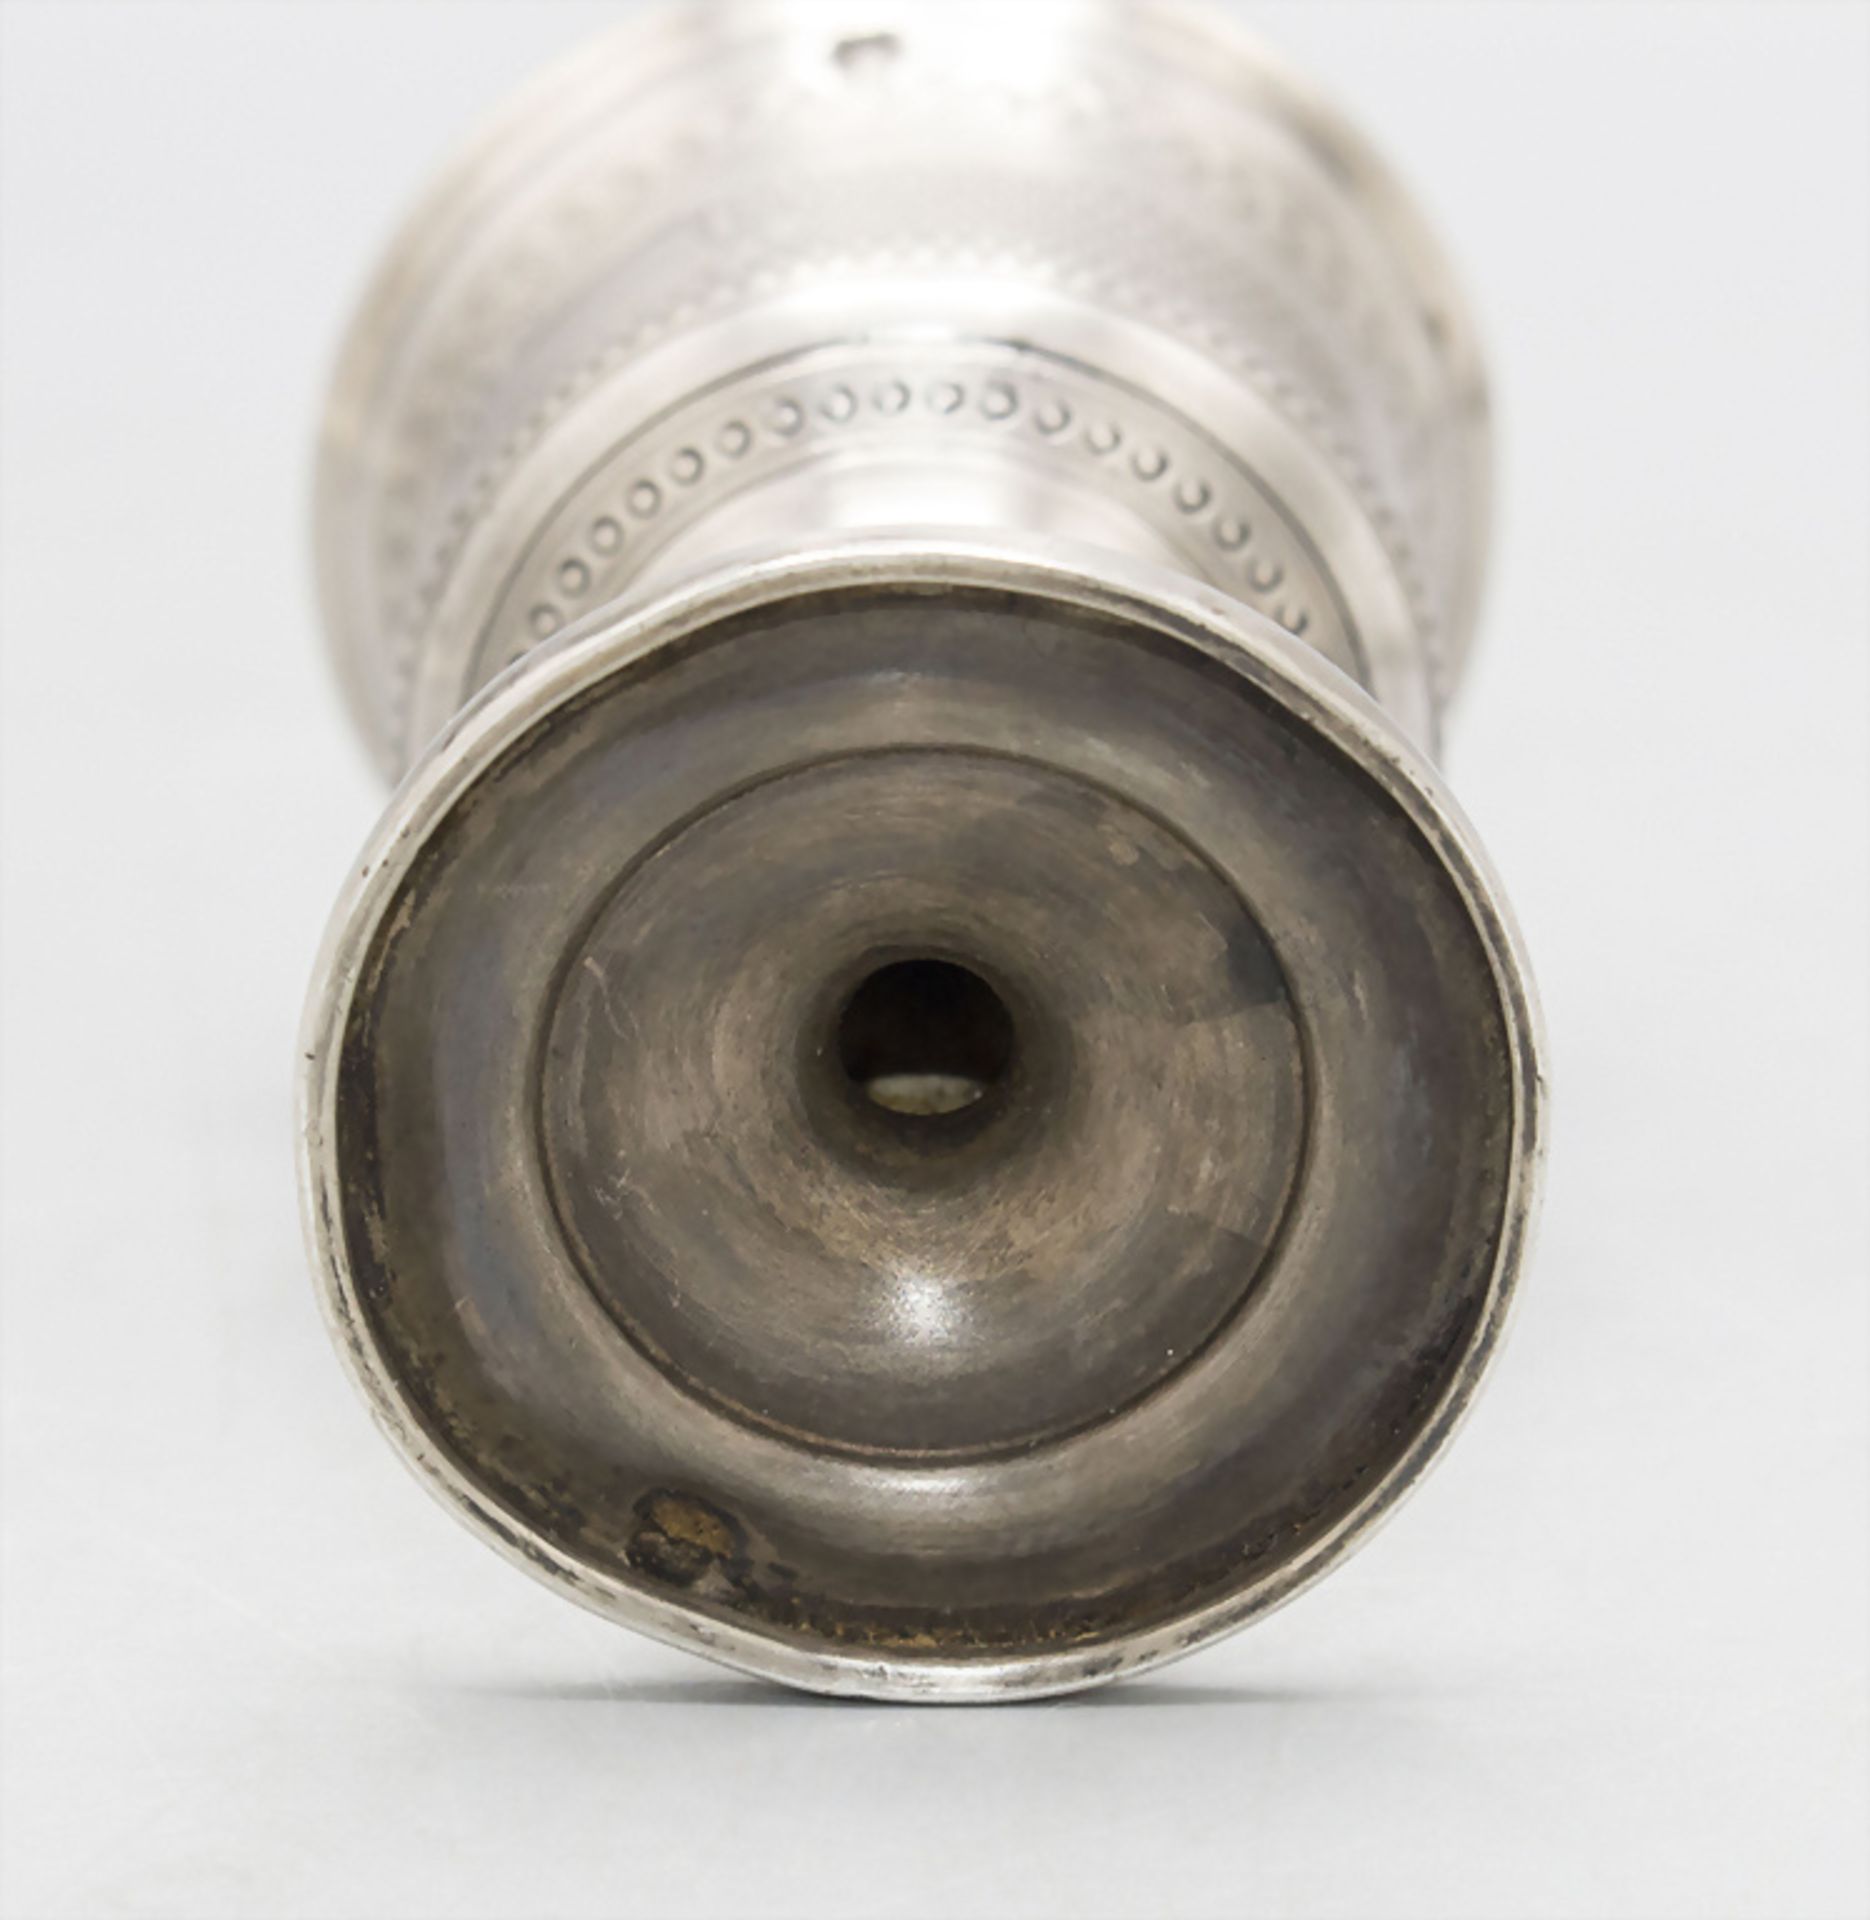 Schnapsbecher / A silver liquor cup, Frankreich, 2. Hälfte 19. Jh. - Image 3 of 5